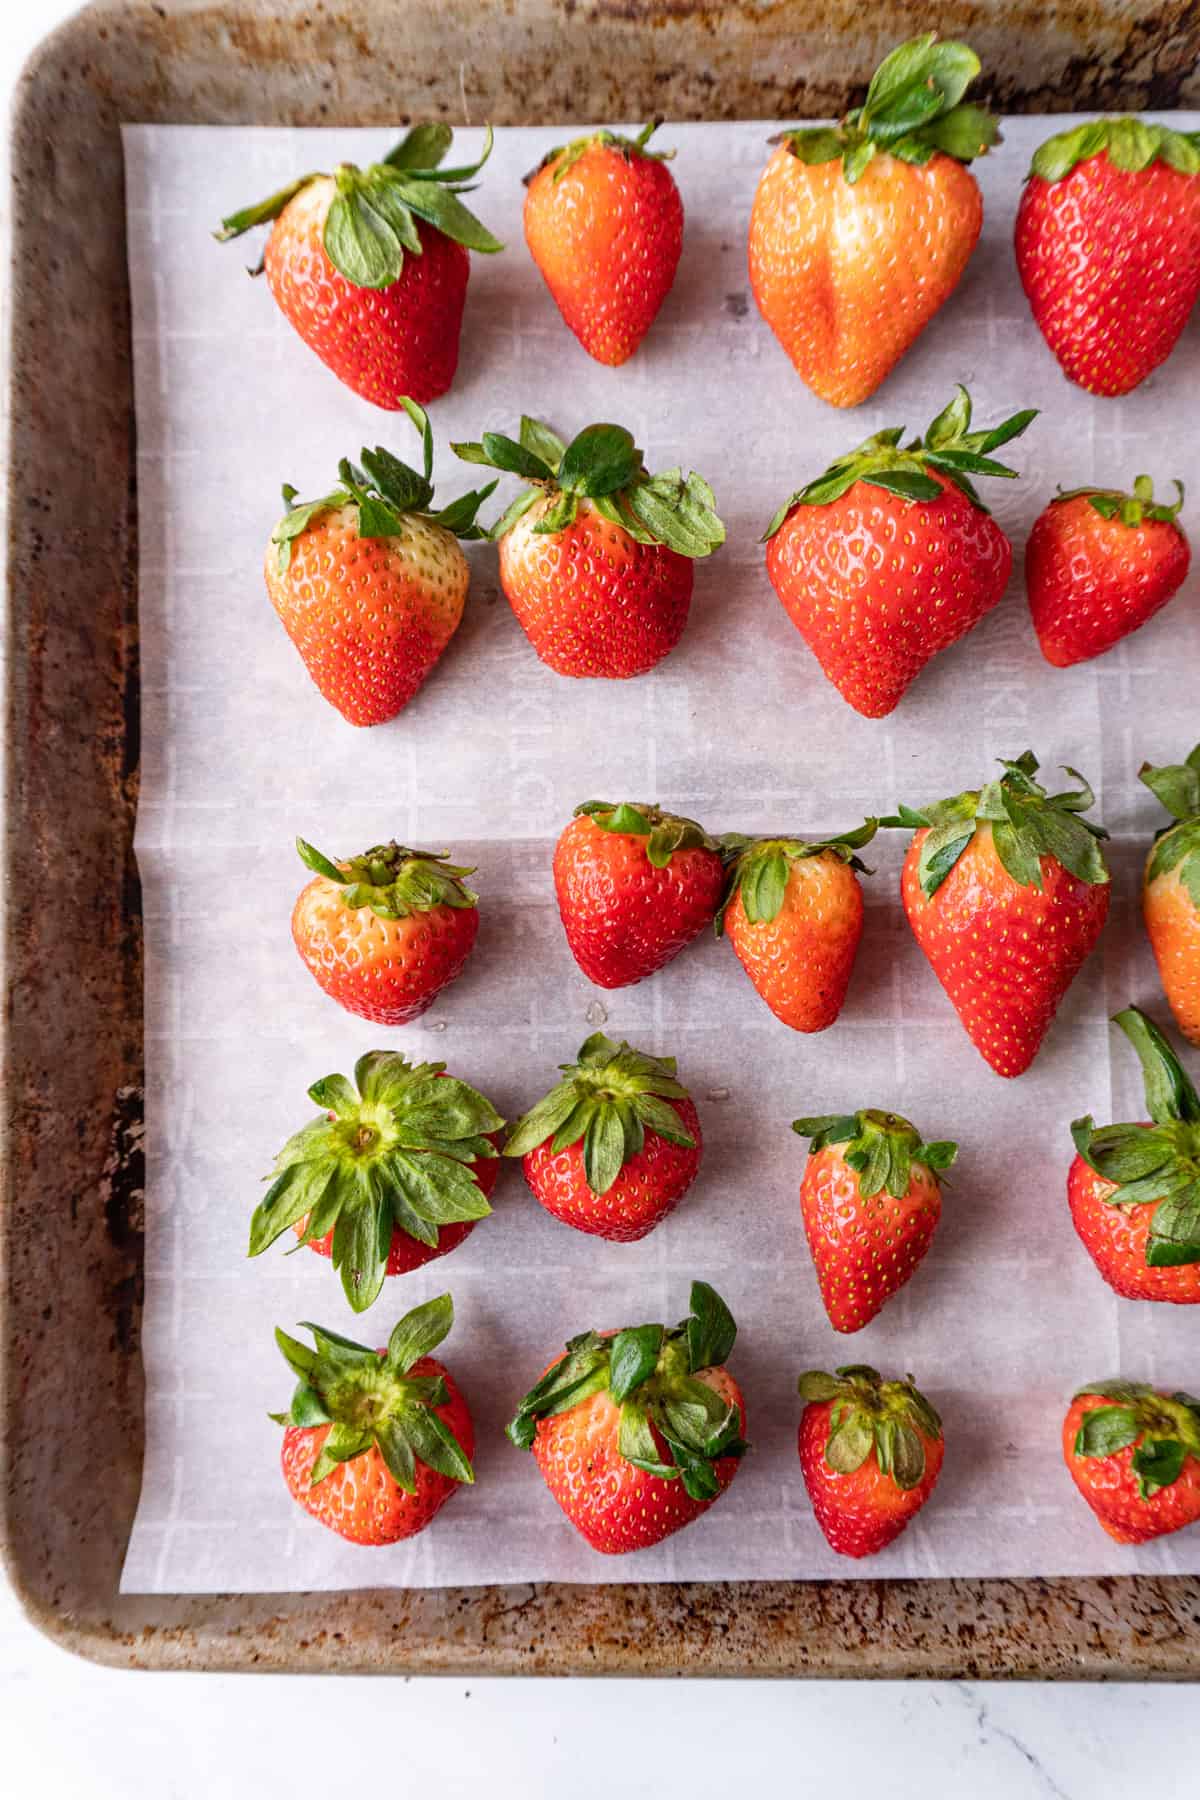 strawberries on baking sheet close up